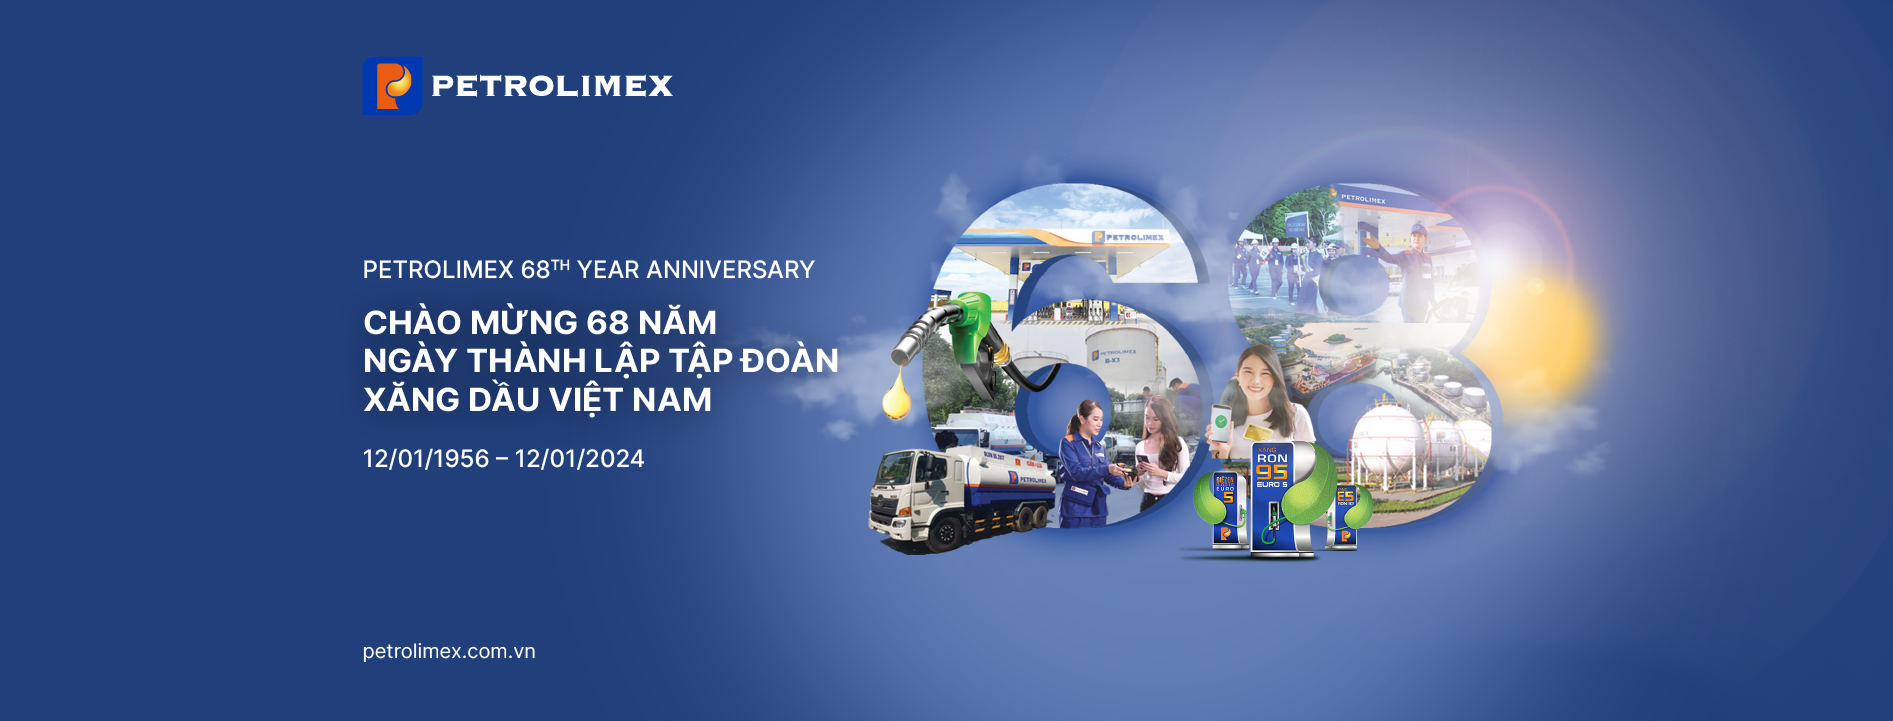 Cover image for Xăng dầu Việt Nam Petrolimex